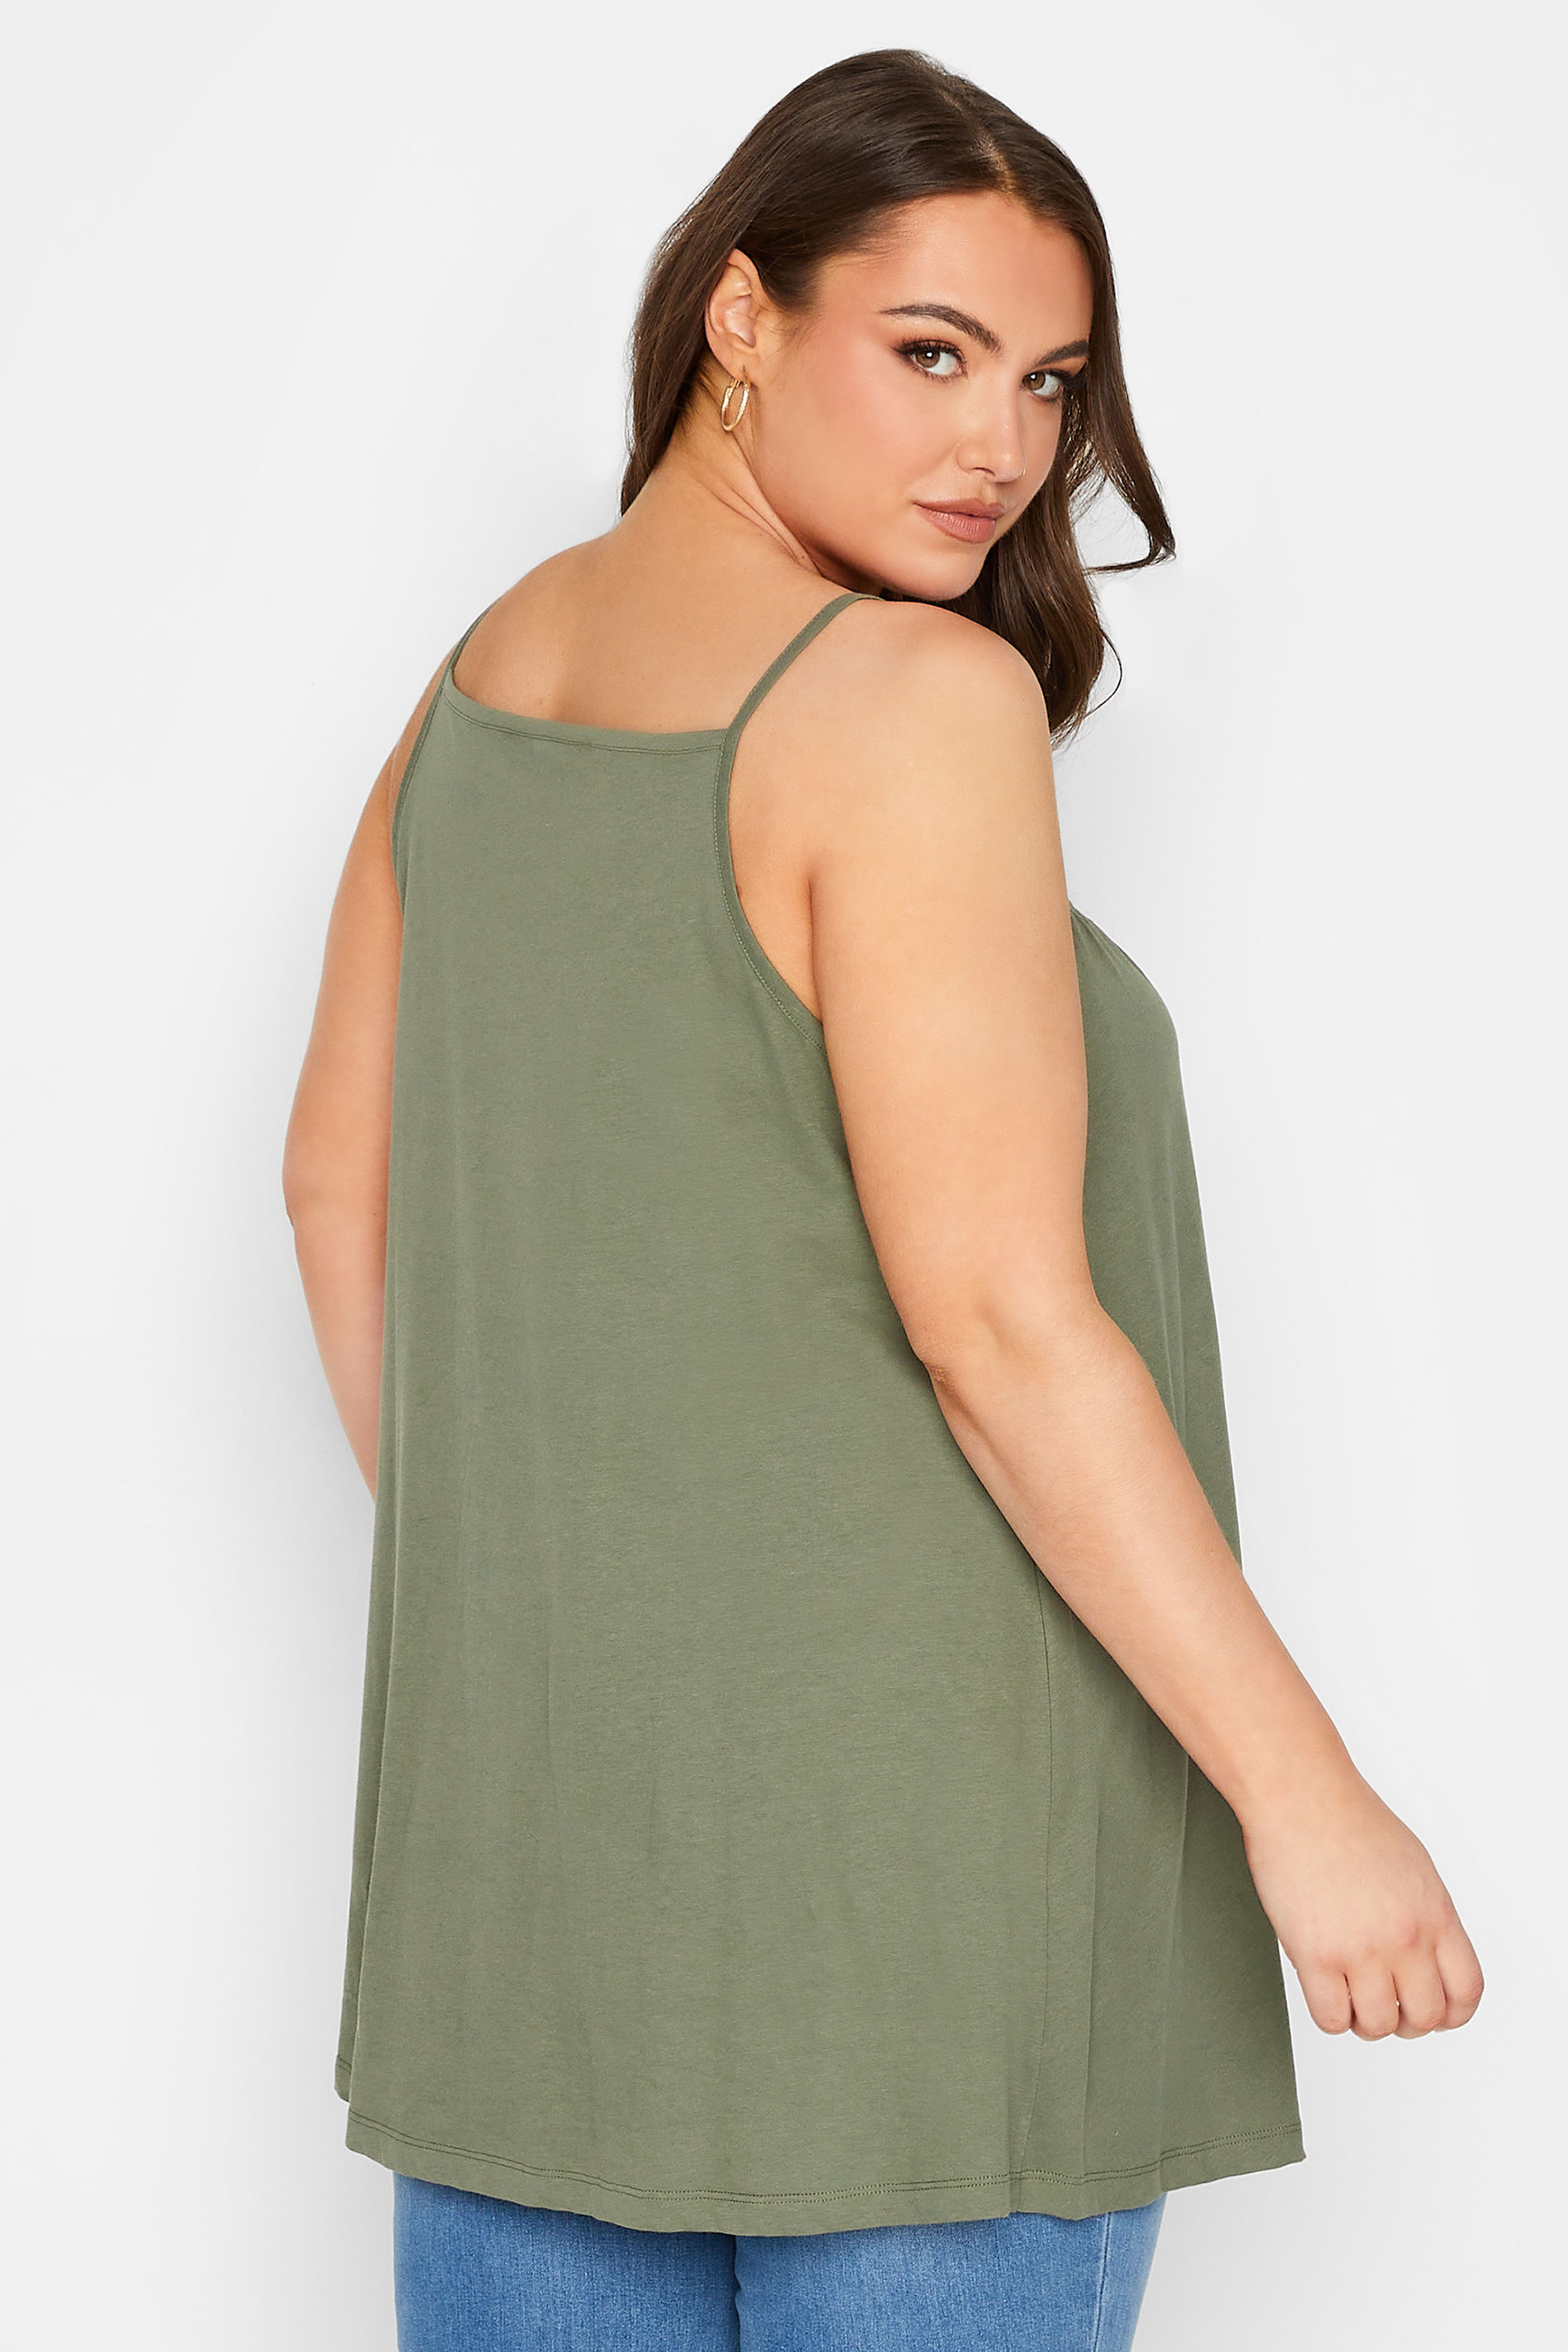 YOURS Plus Size Khaki Green Crochet Vest Top | Yours Clothing  3